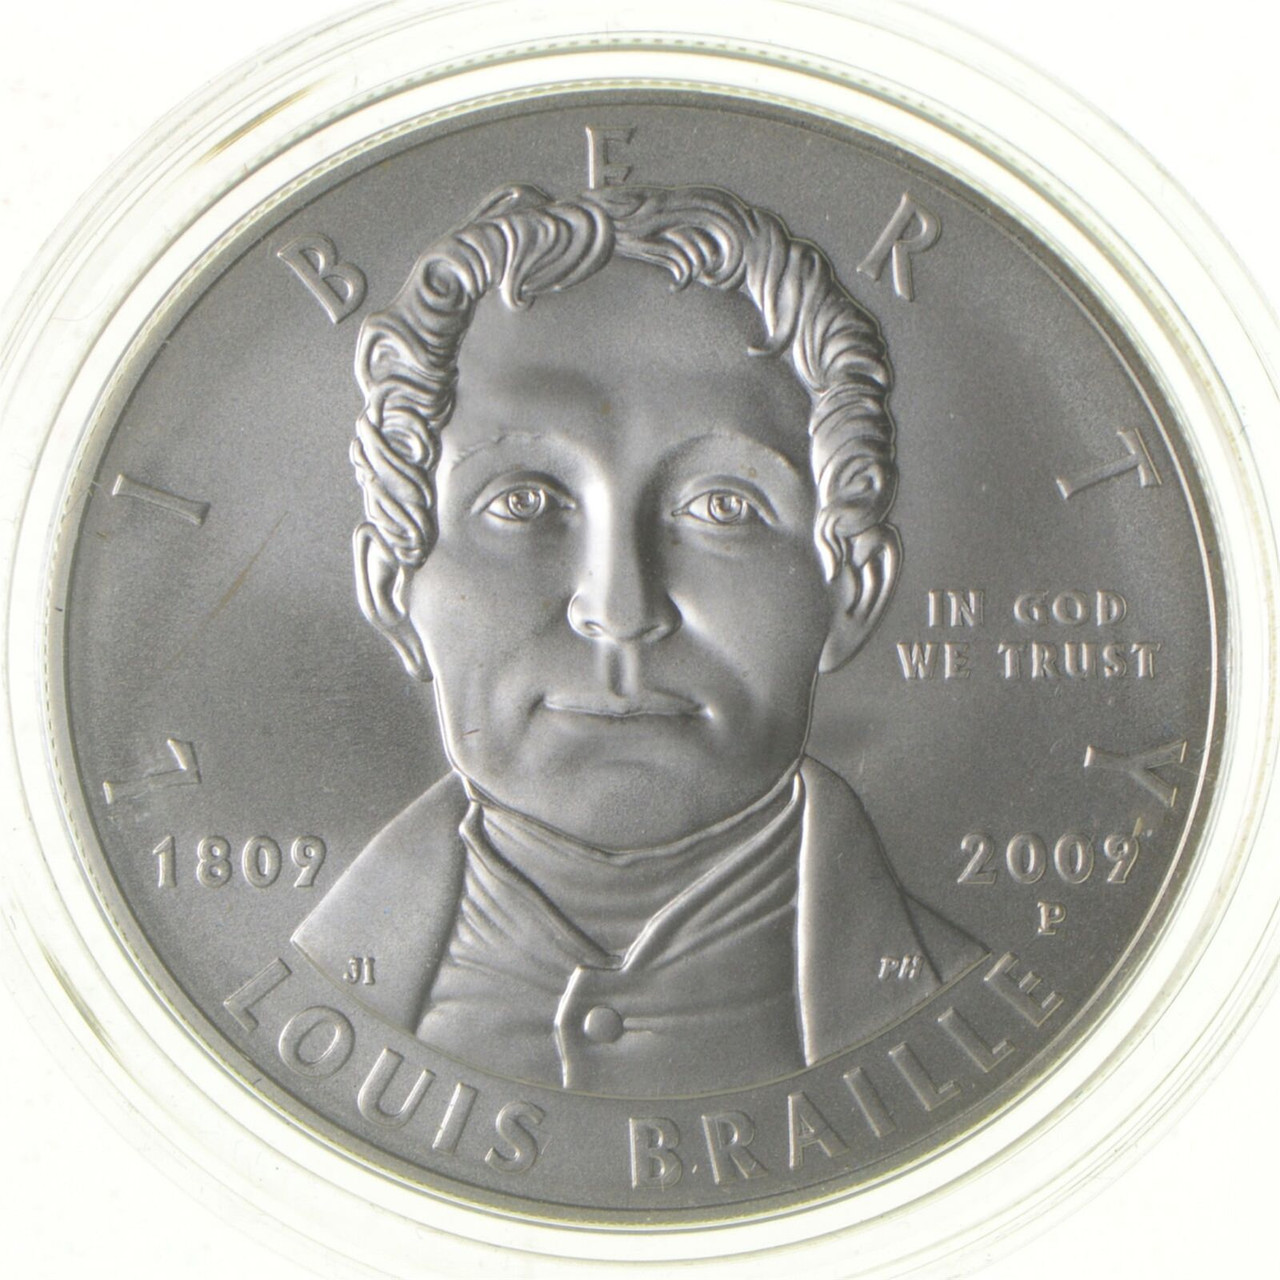 2009 louis braille silver dollar